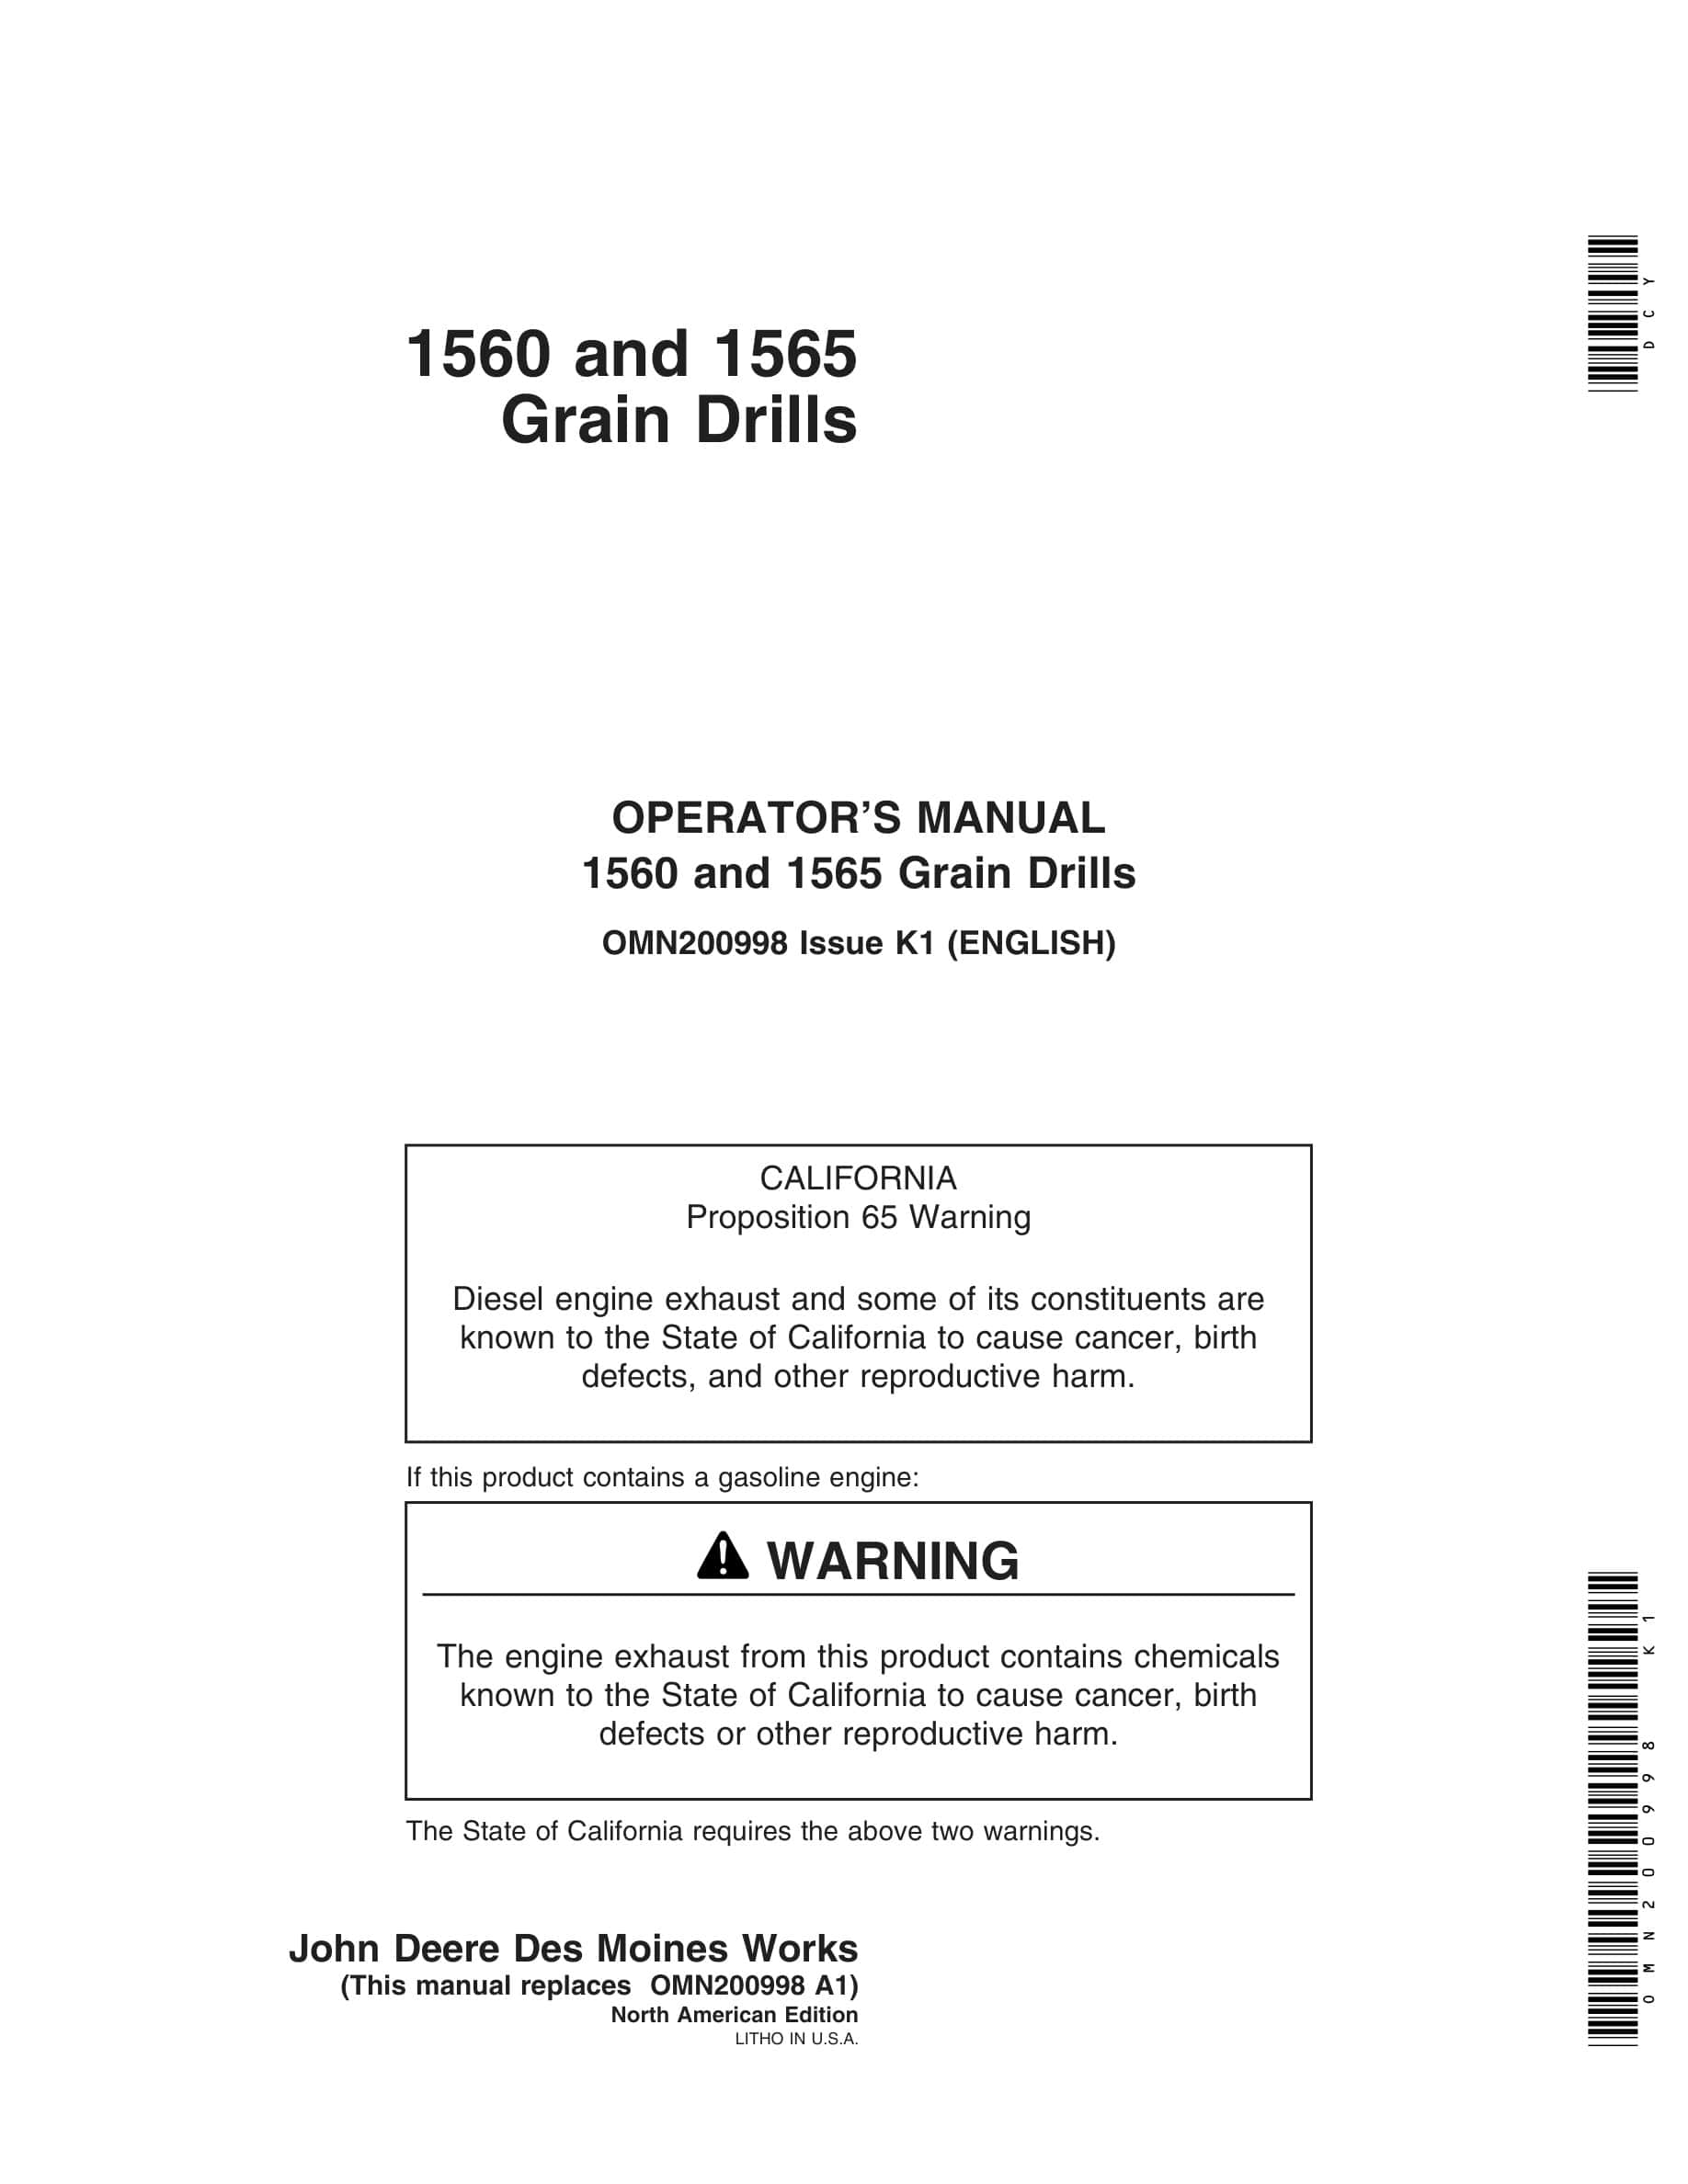 John Deere 1560 and 1565 Grain Drill Operator Manual OMN200998-1